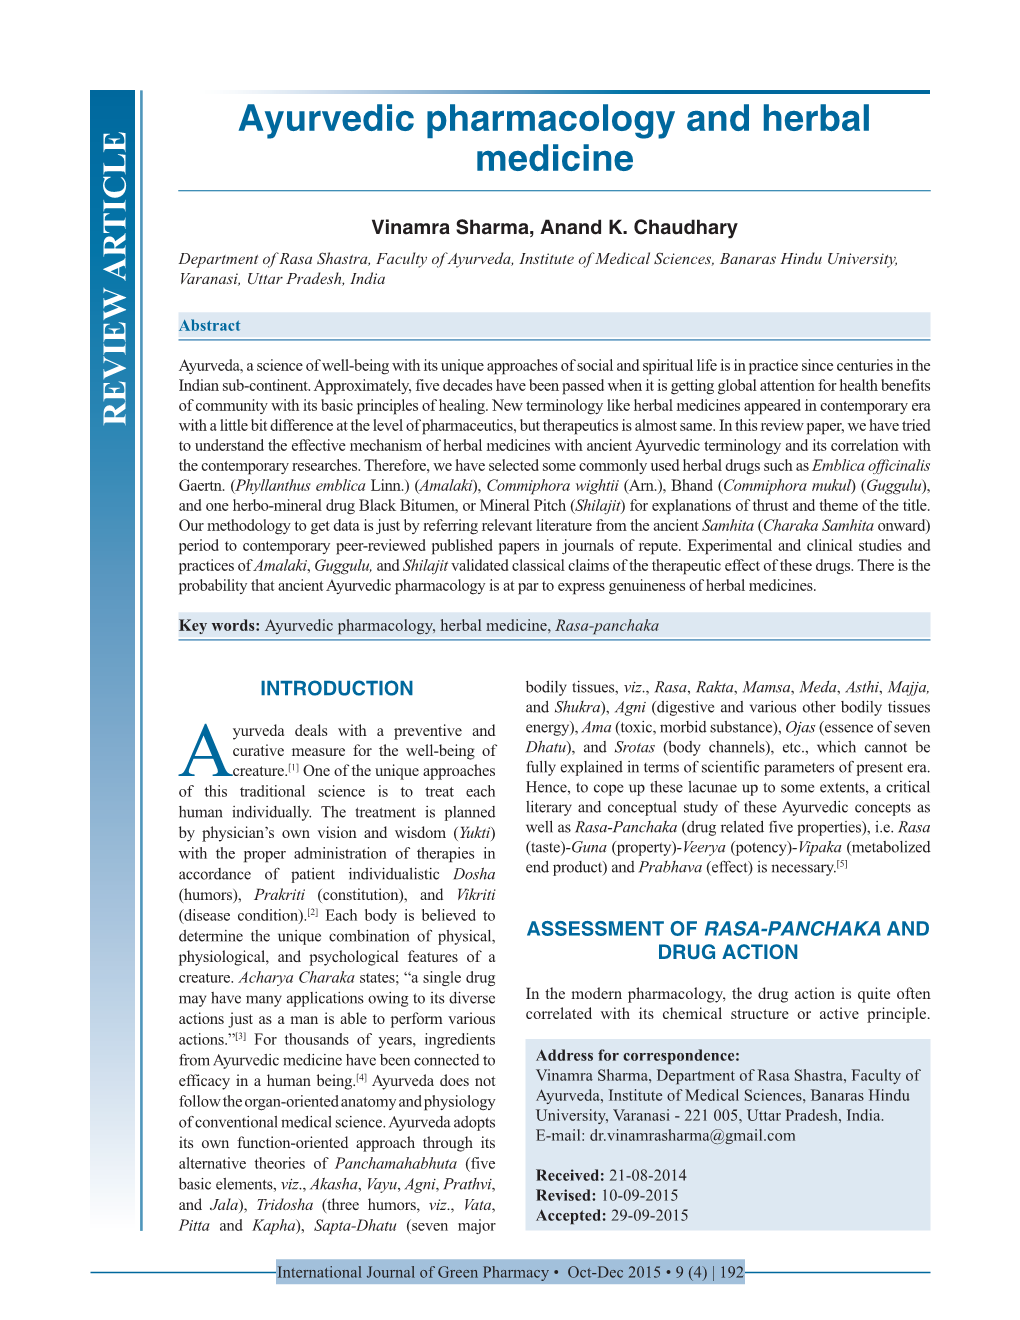 Ayurvedic Pharmacology and Herbal Medicine